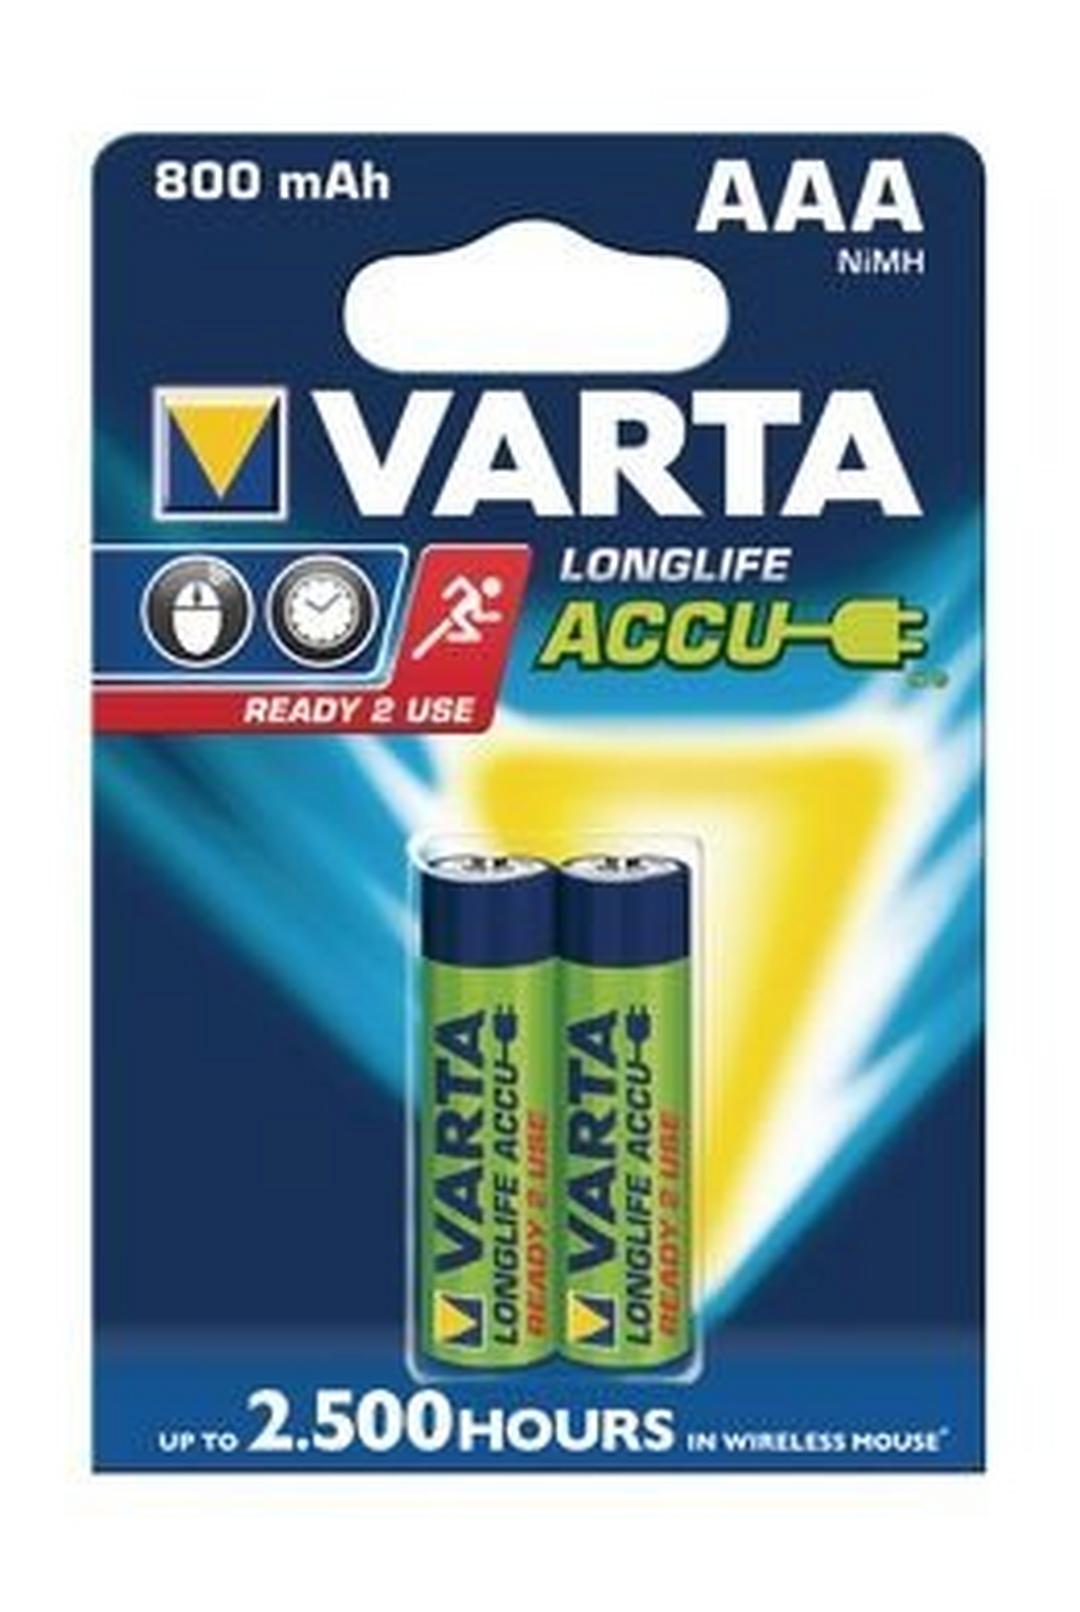 Varta Rechargeable ACCU 2 AAA Nickel-Metal Battery 800 mAh